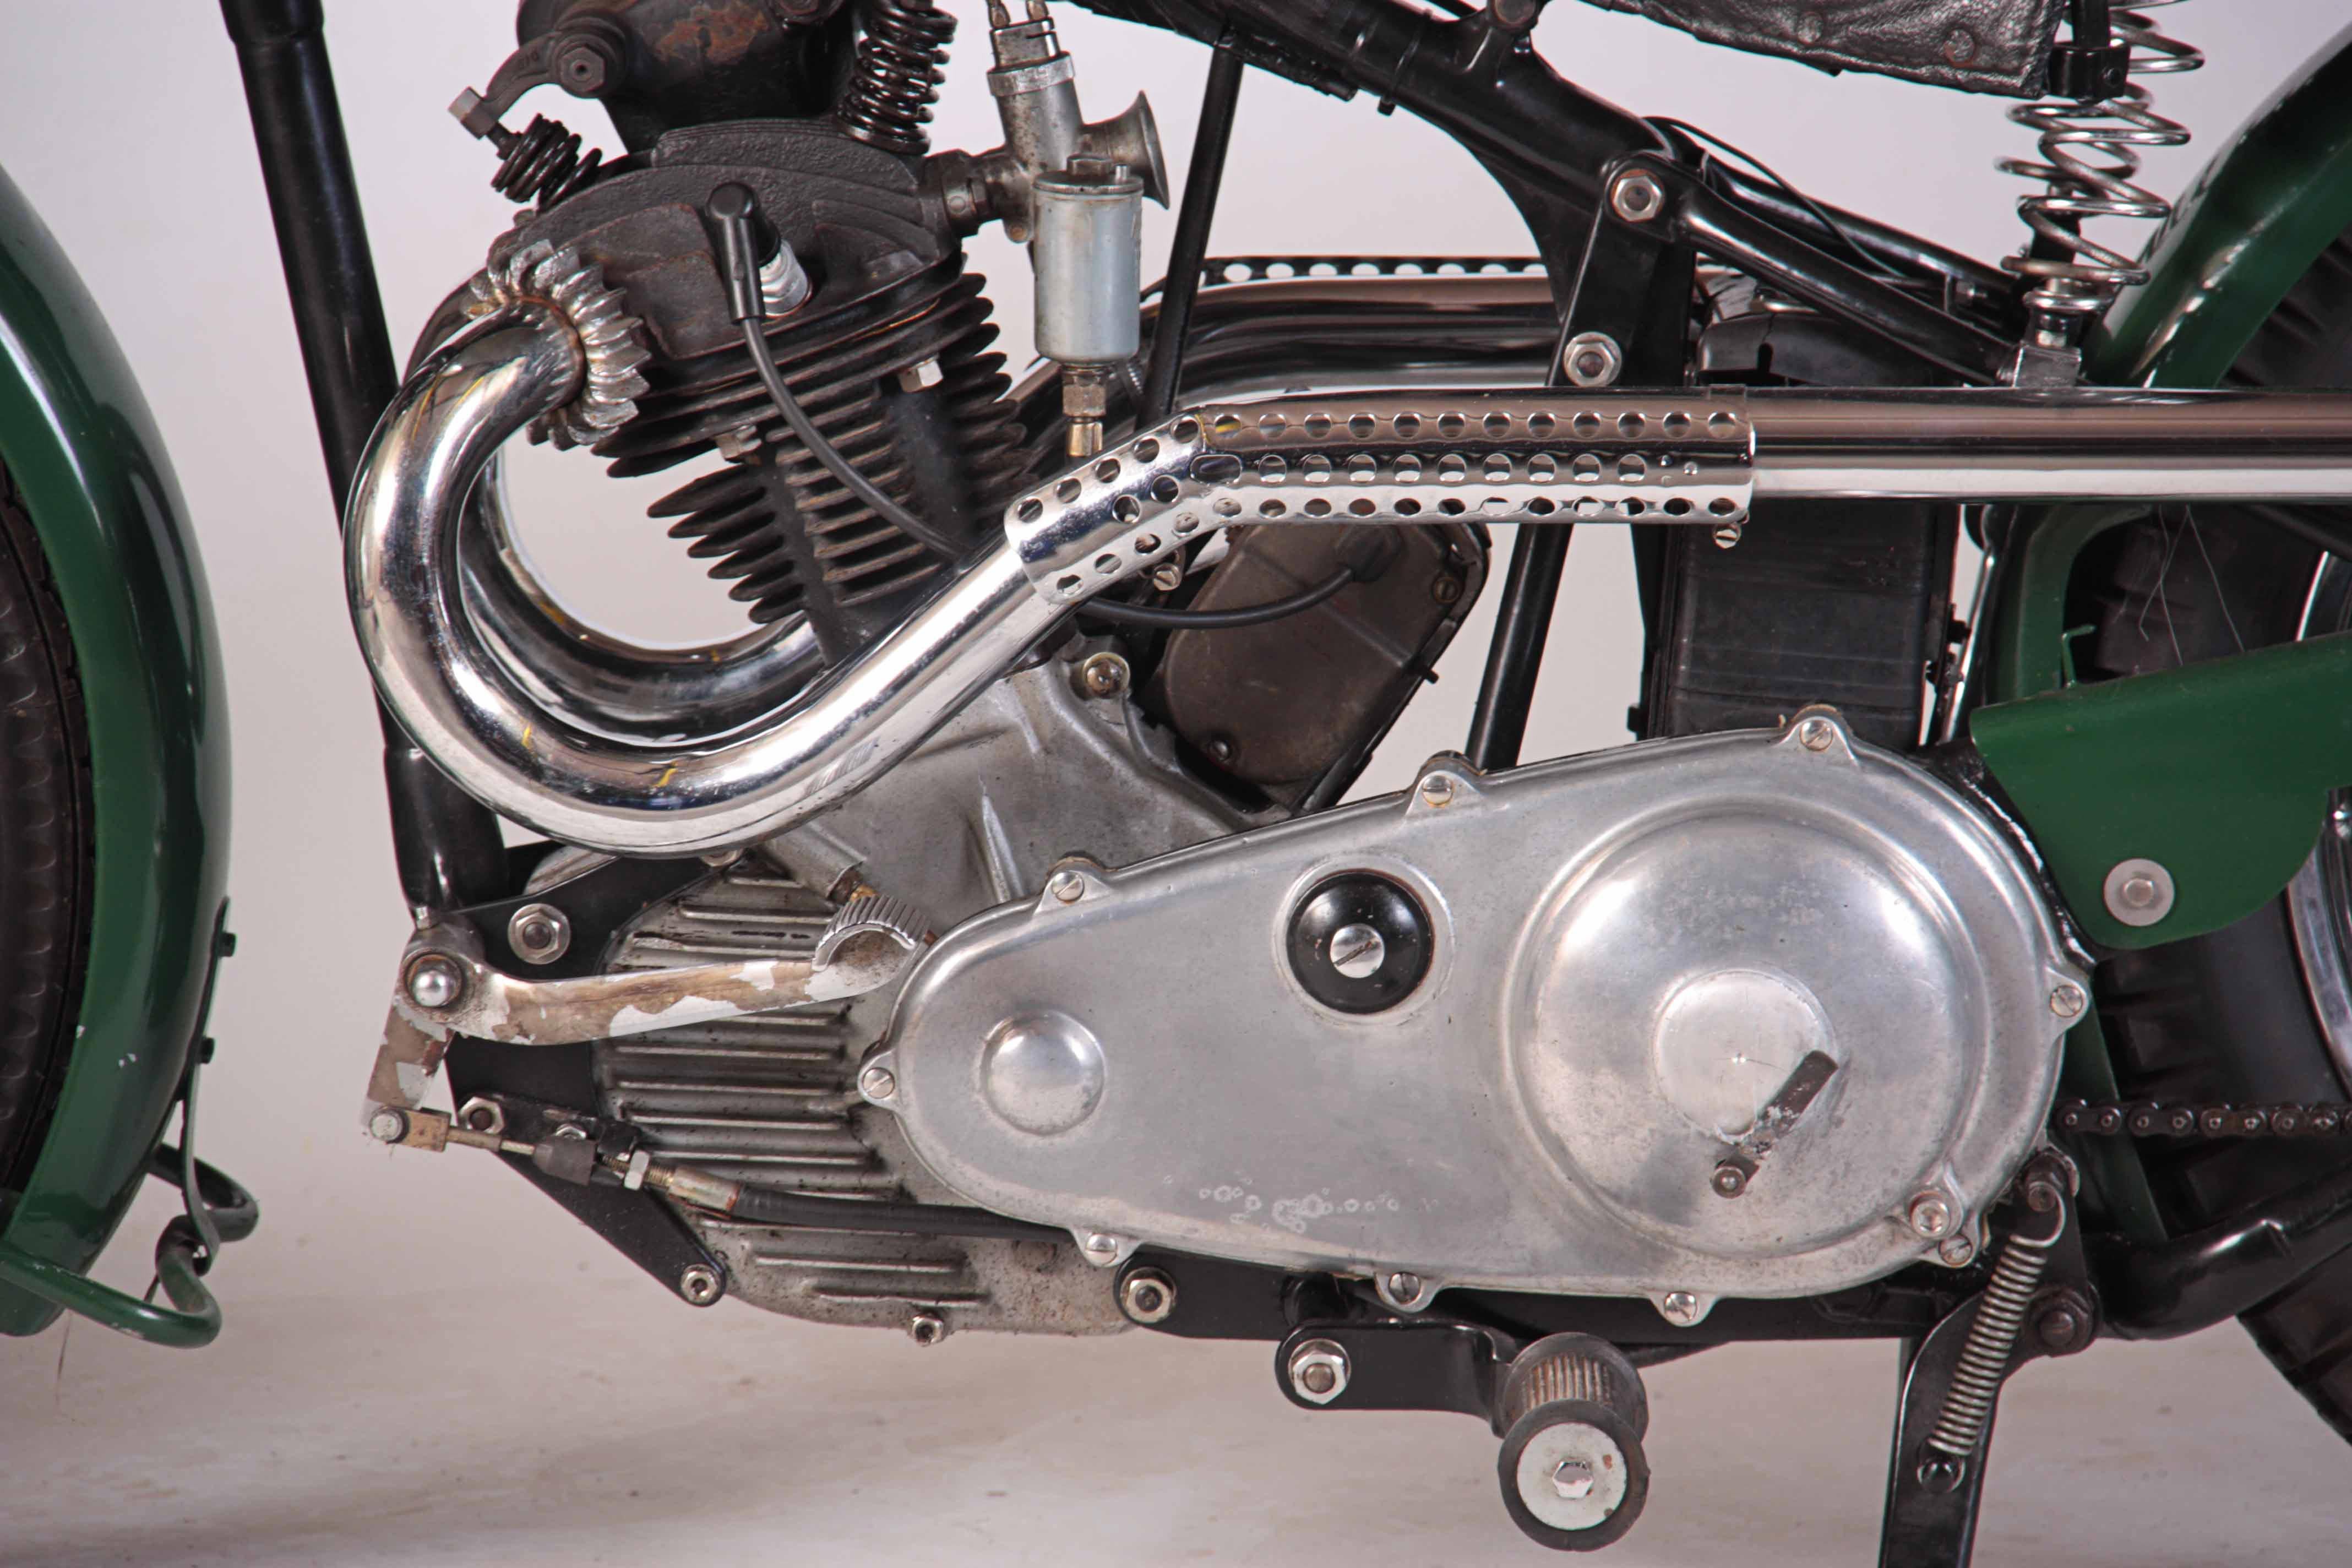 Metal 1932 Phelon and Moore Panther Motorcycle, Vintage 250cc Sloper Engine